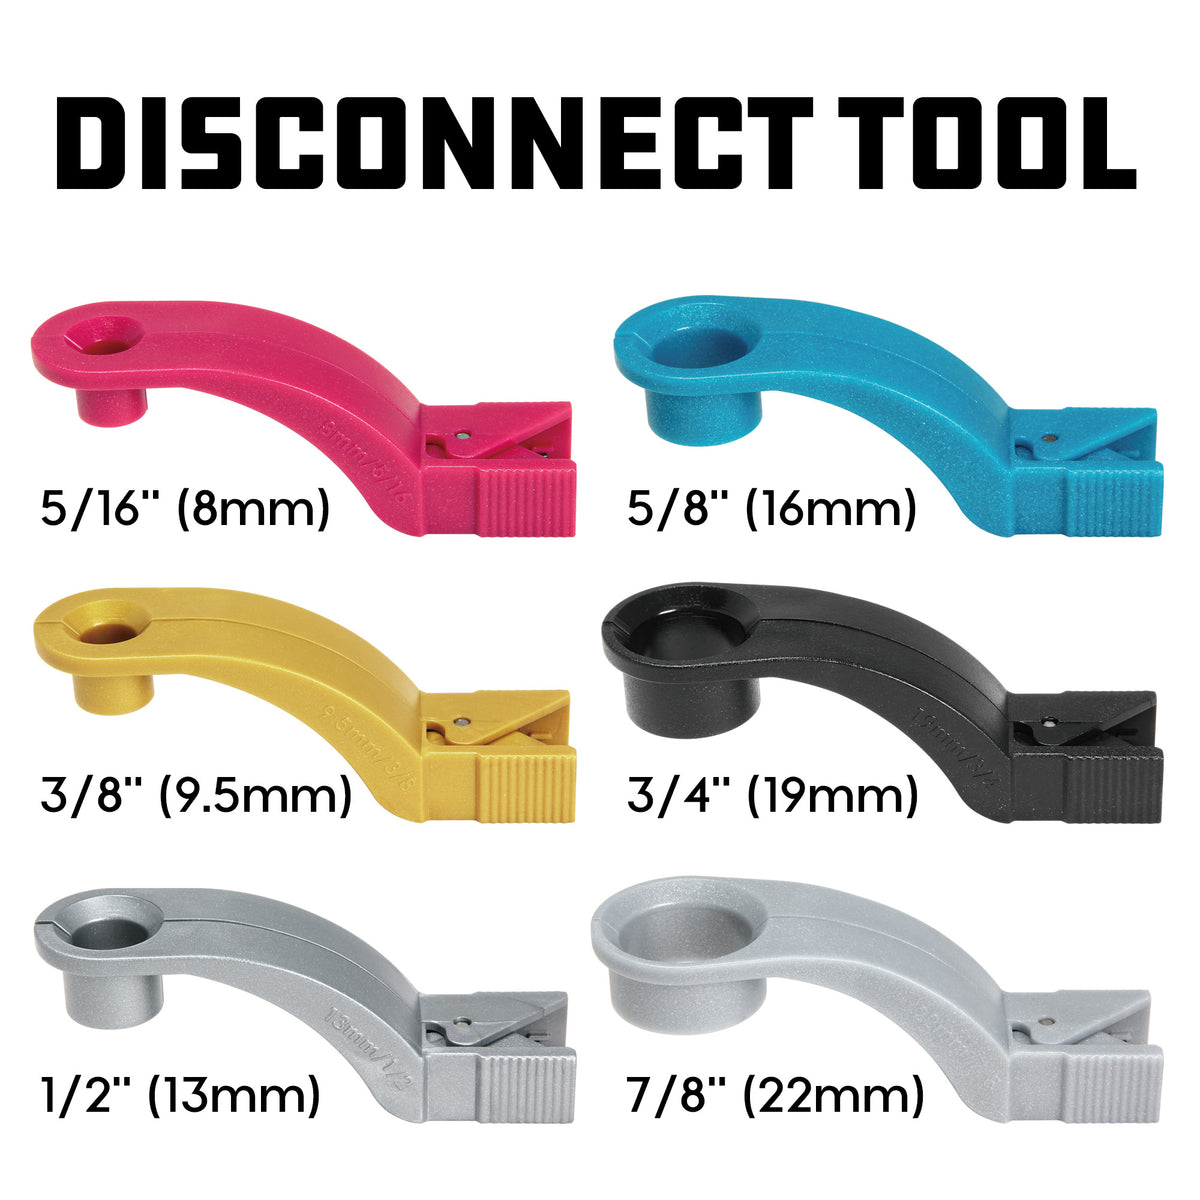 6 Piece Disconnect Tool Set